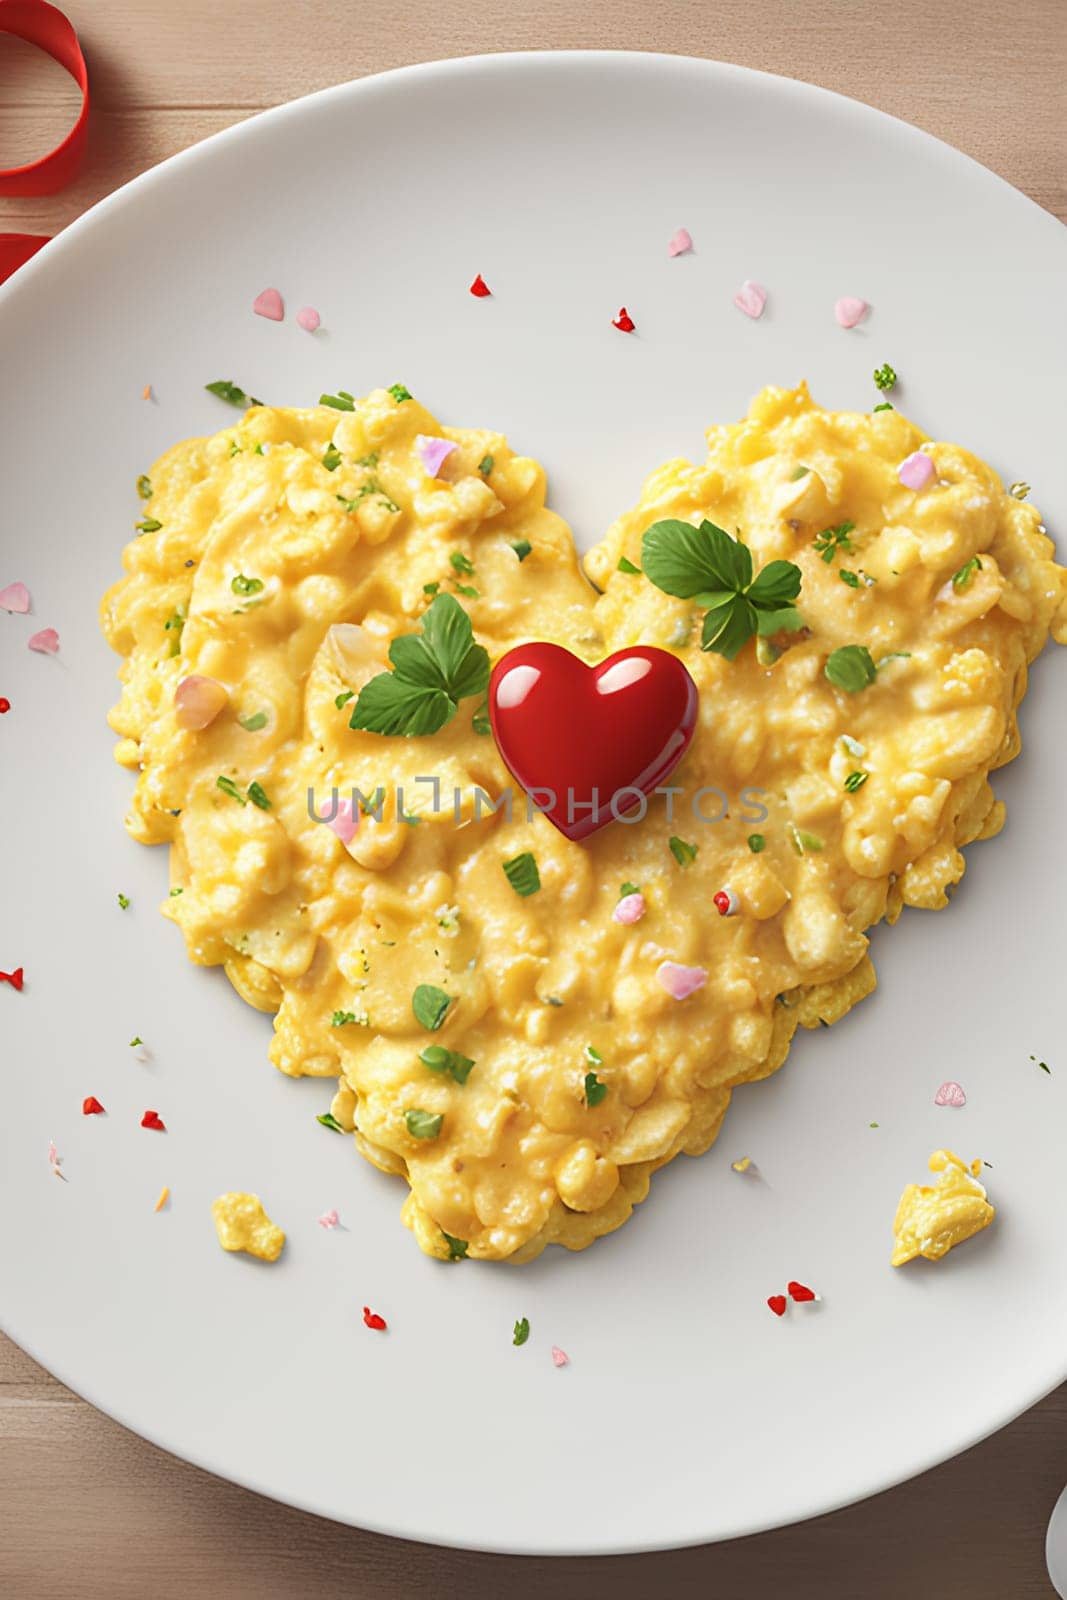 Valentine's Day breakfast - heart-shaped scrambled eggs. by Annu1tochka